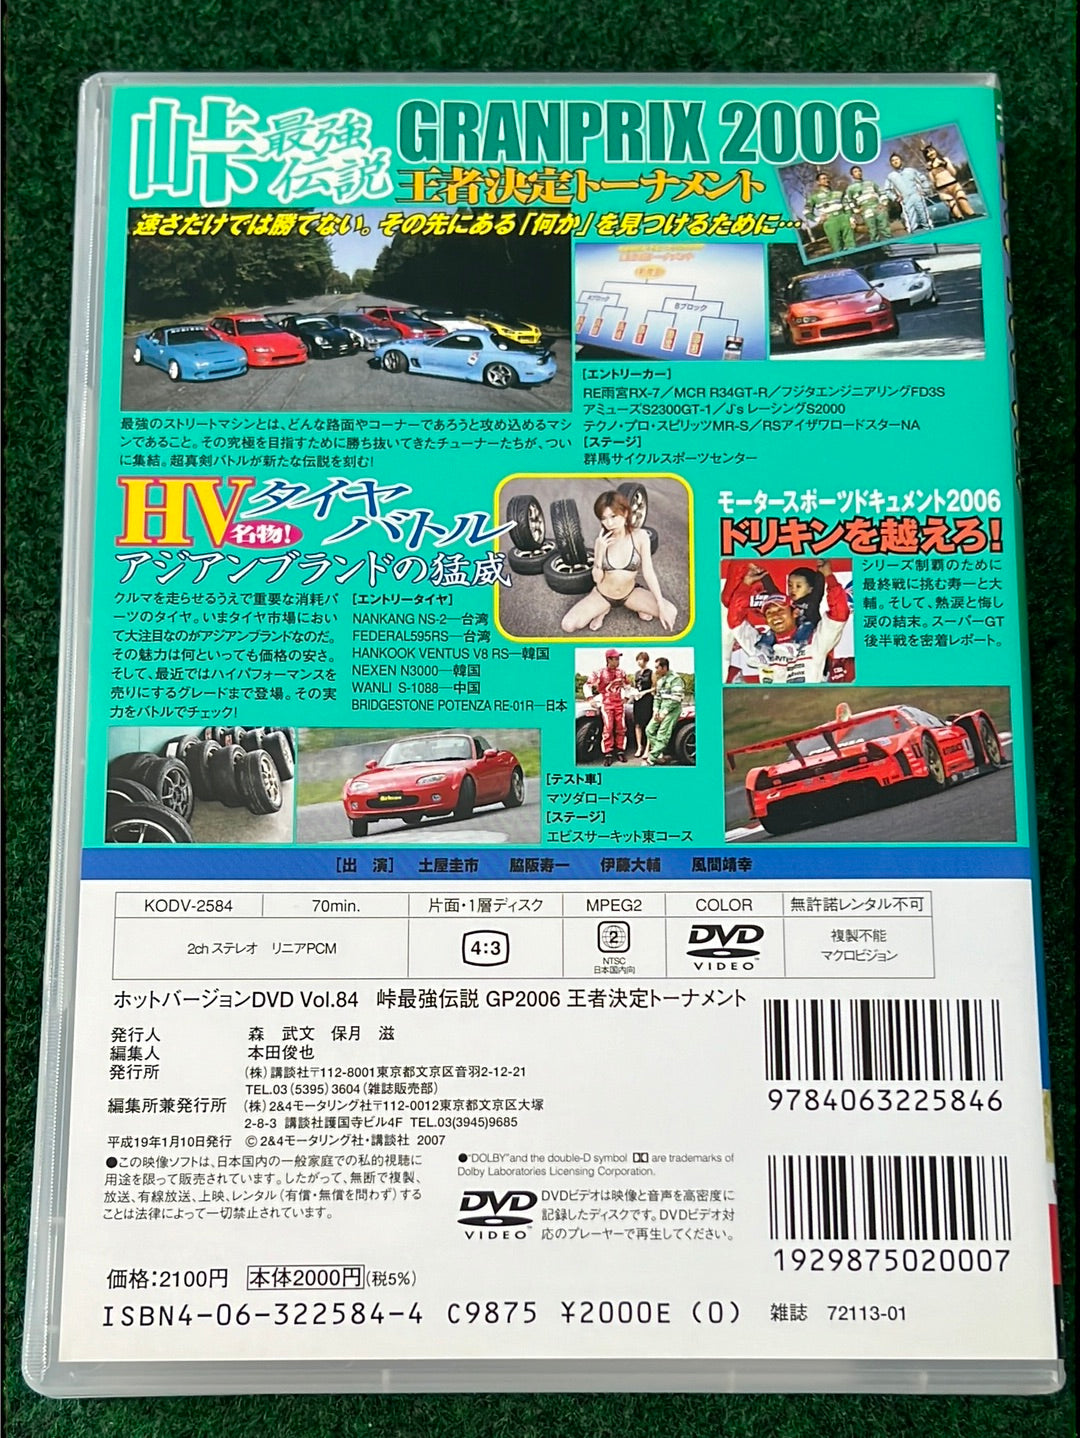 Hot Version DVD - Vol. 84